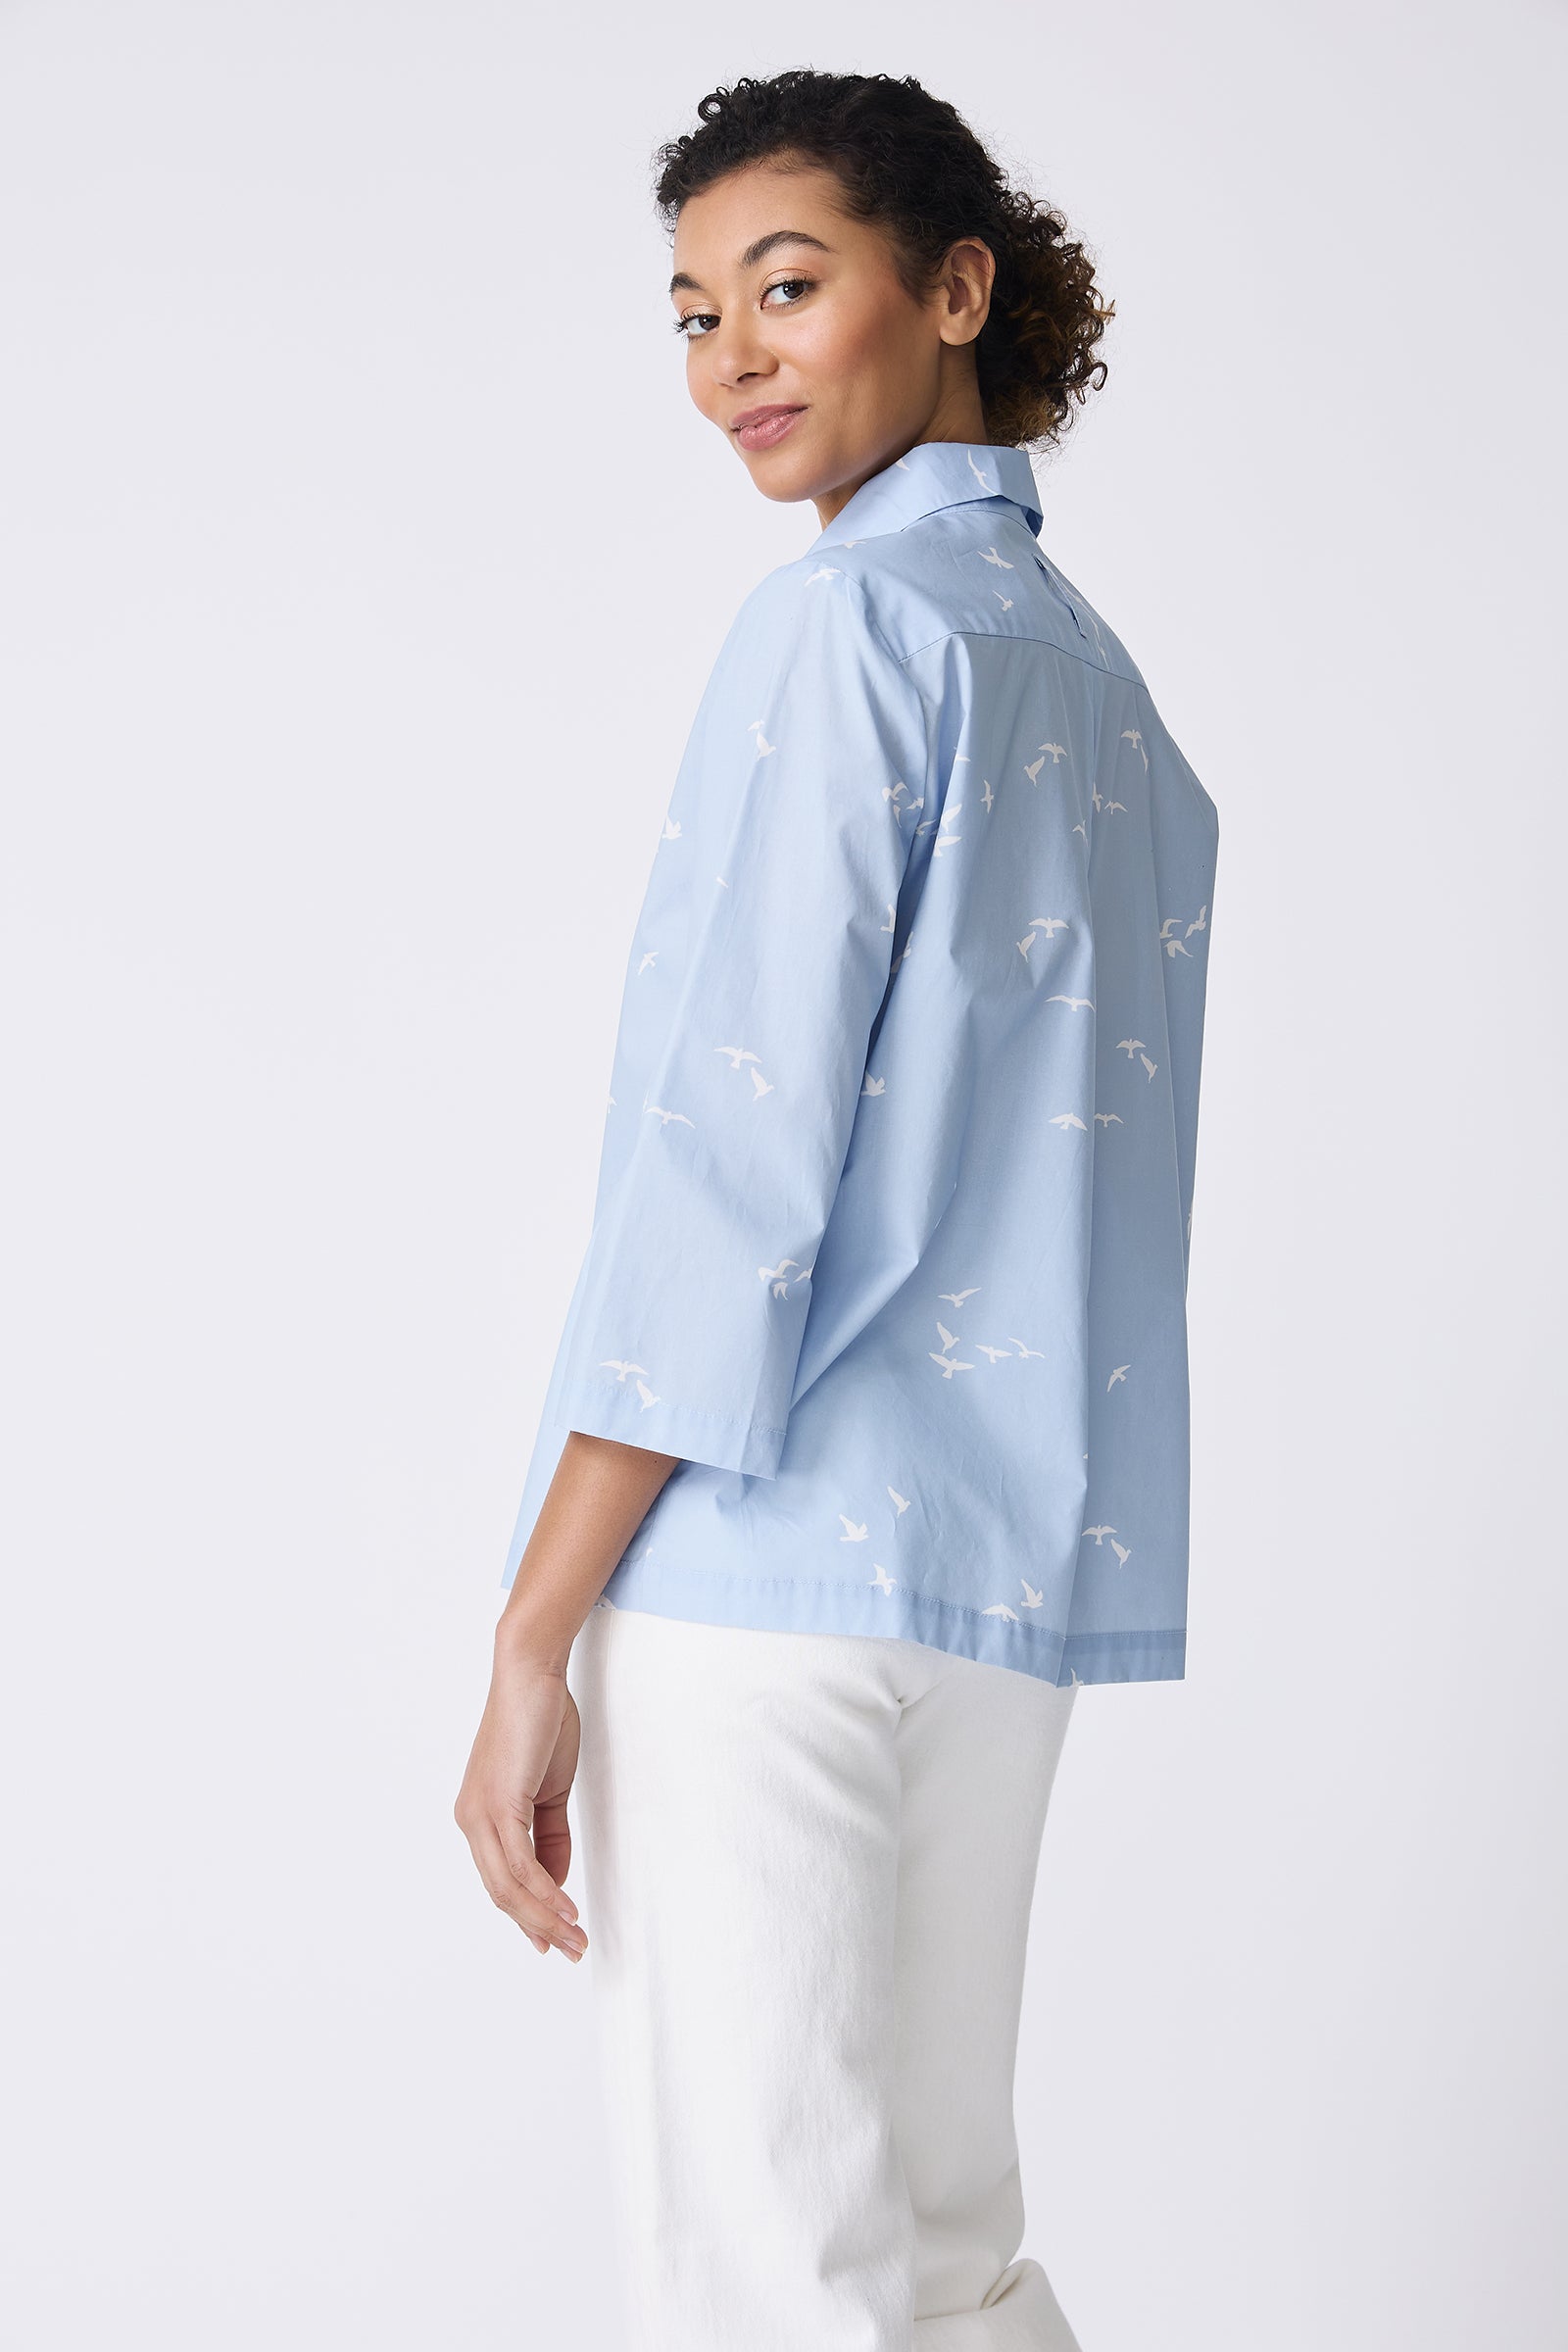 Kal Rieman 3/4 Sleeve Ginna Shirt in Oxford Blue Bird Print on model back view